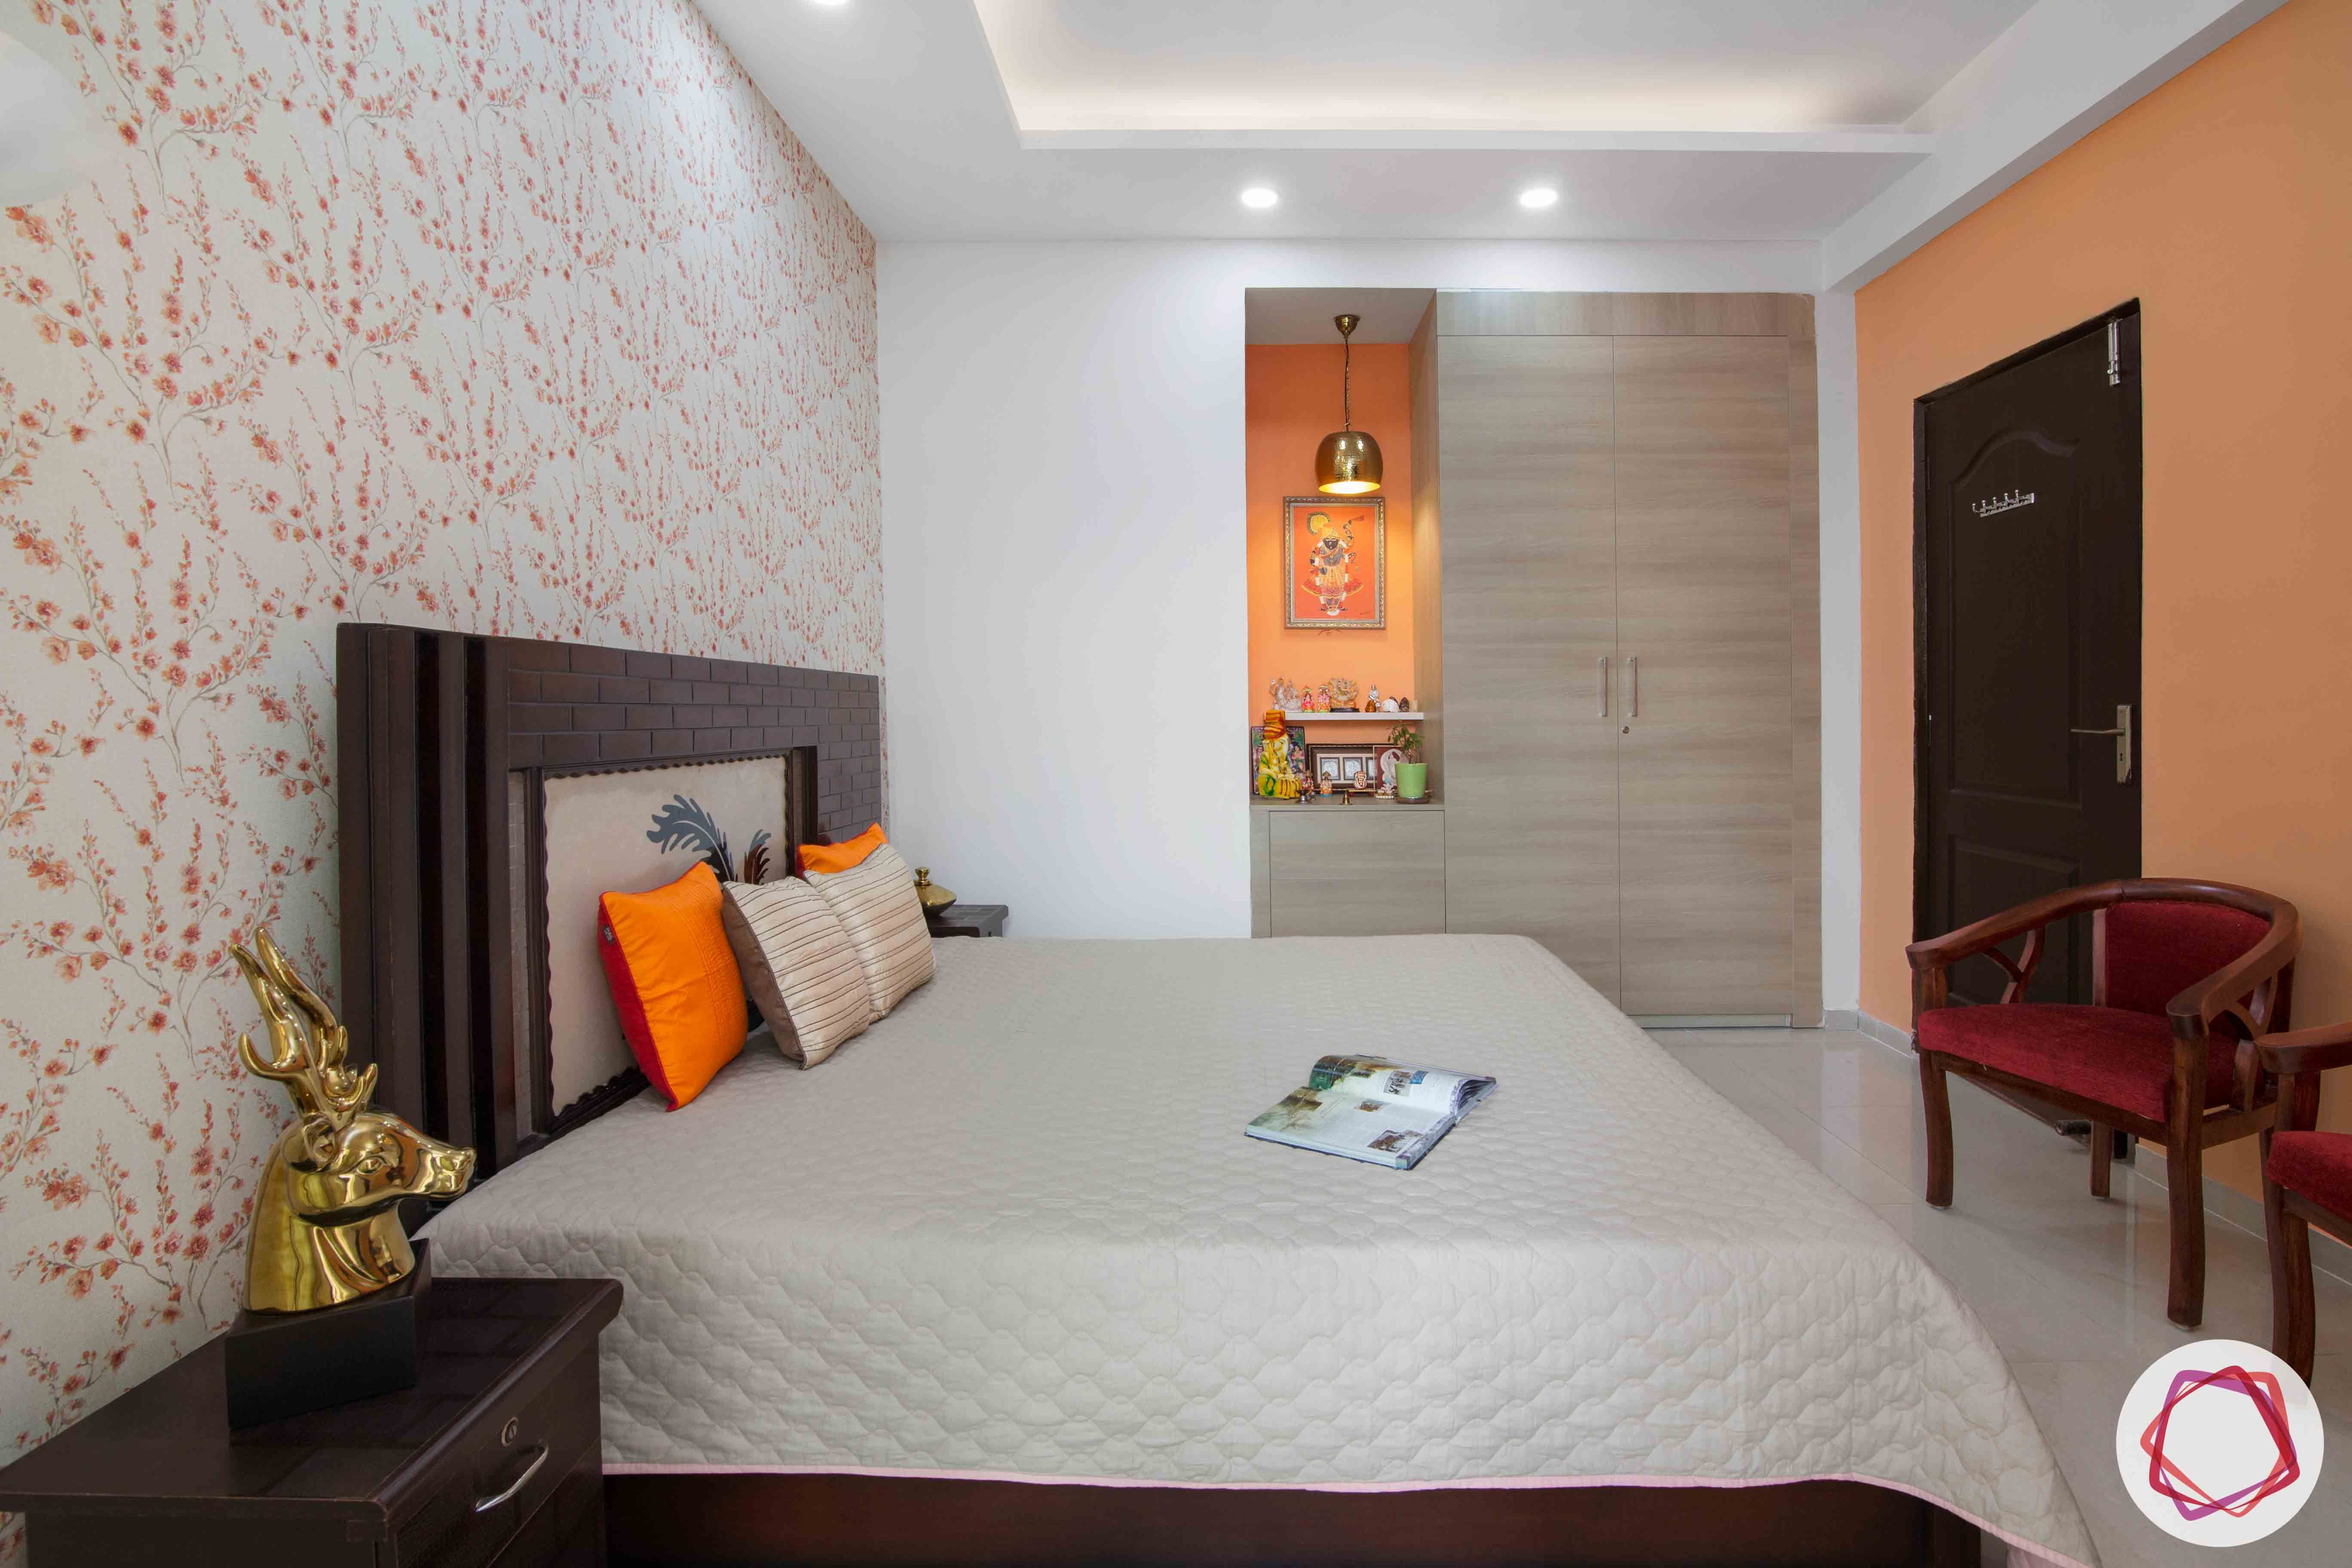 3bhk flat interior design-floral wallpaper designs-pooja unit designs